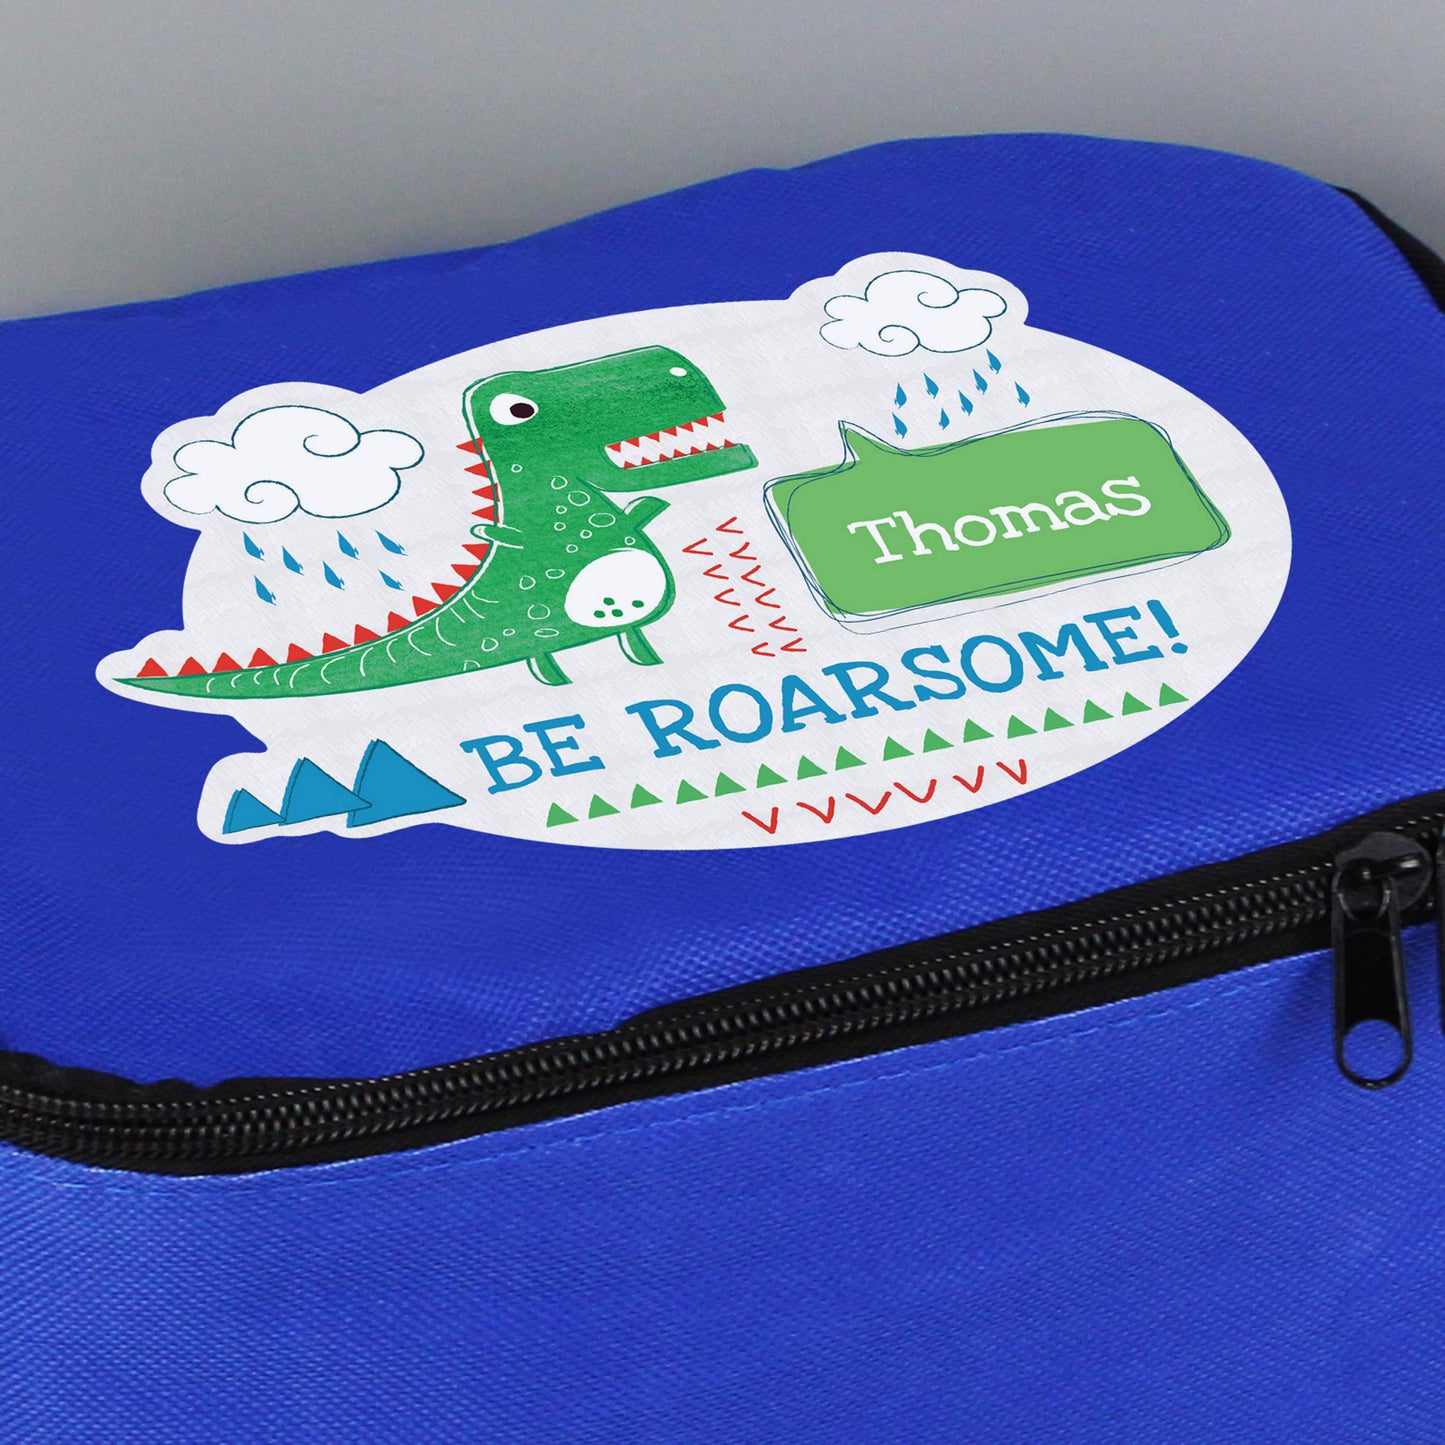 Personalised Dinosaur Lunch Bag